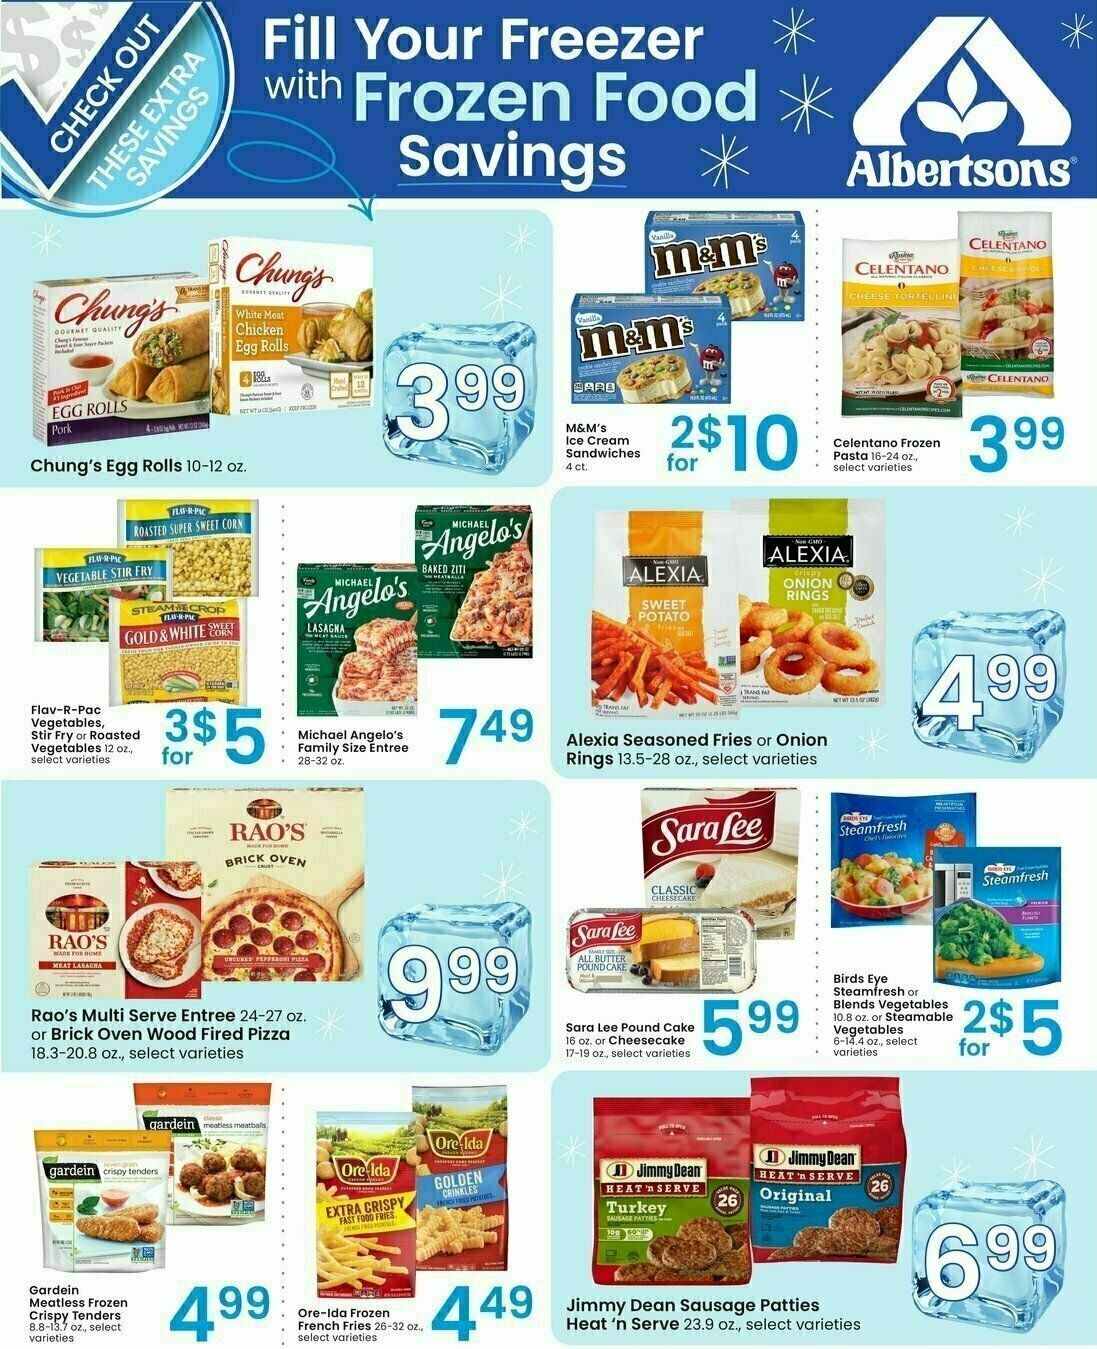 Albertsons Bonus Savings Weekly Ad from March 20